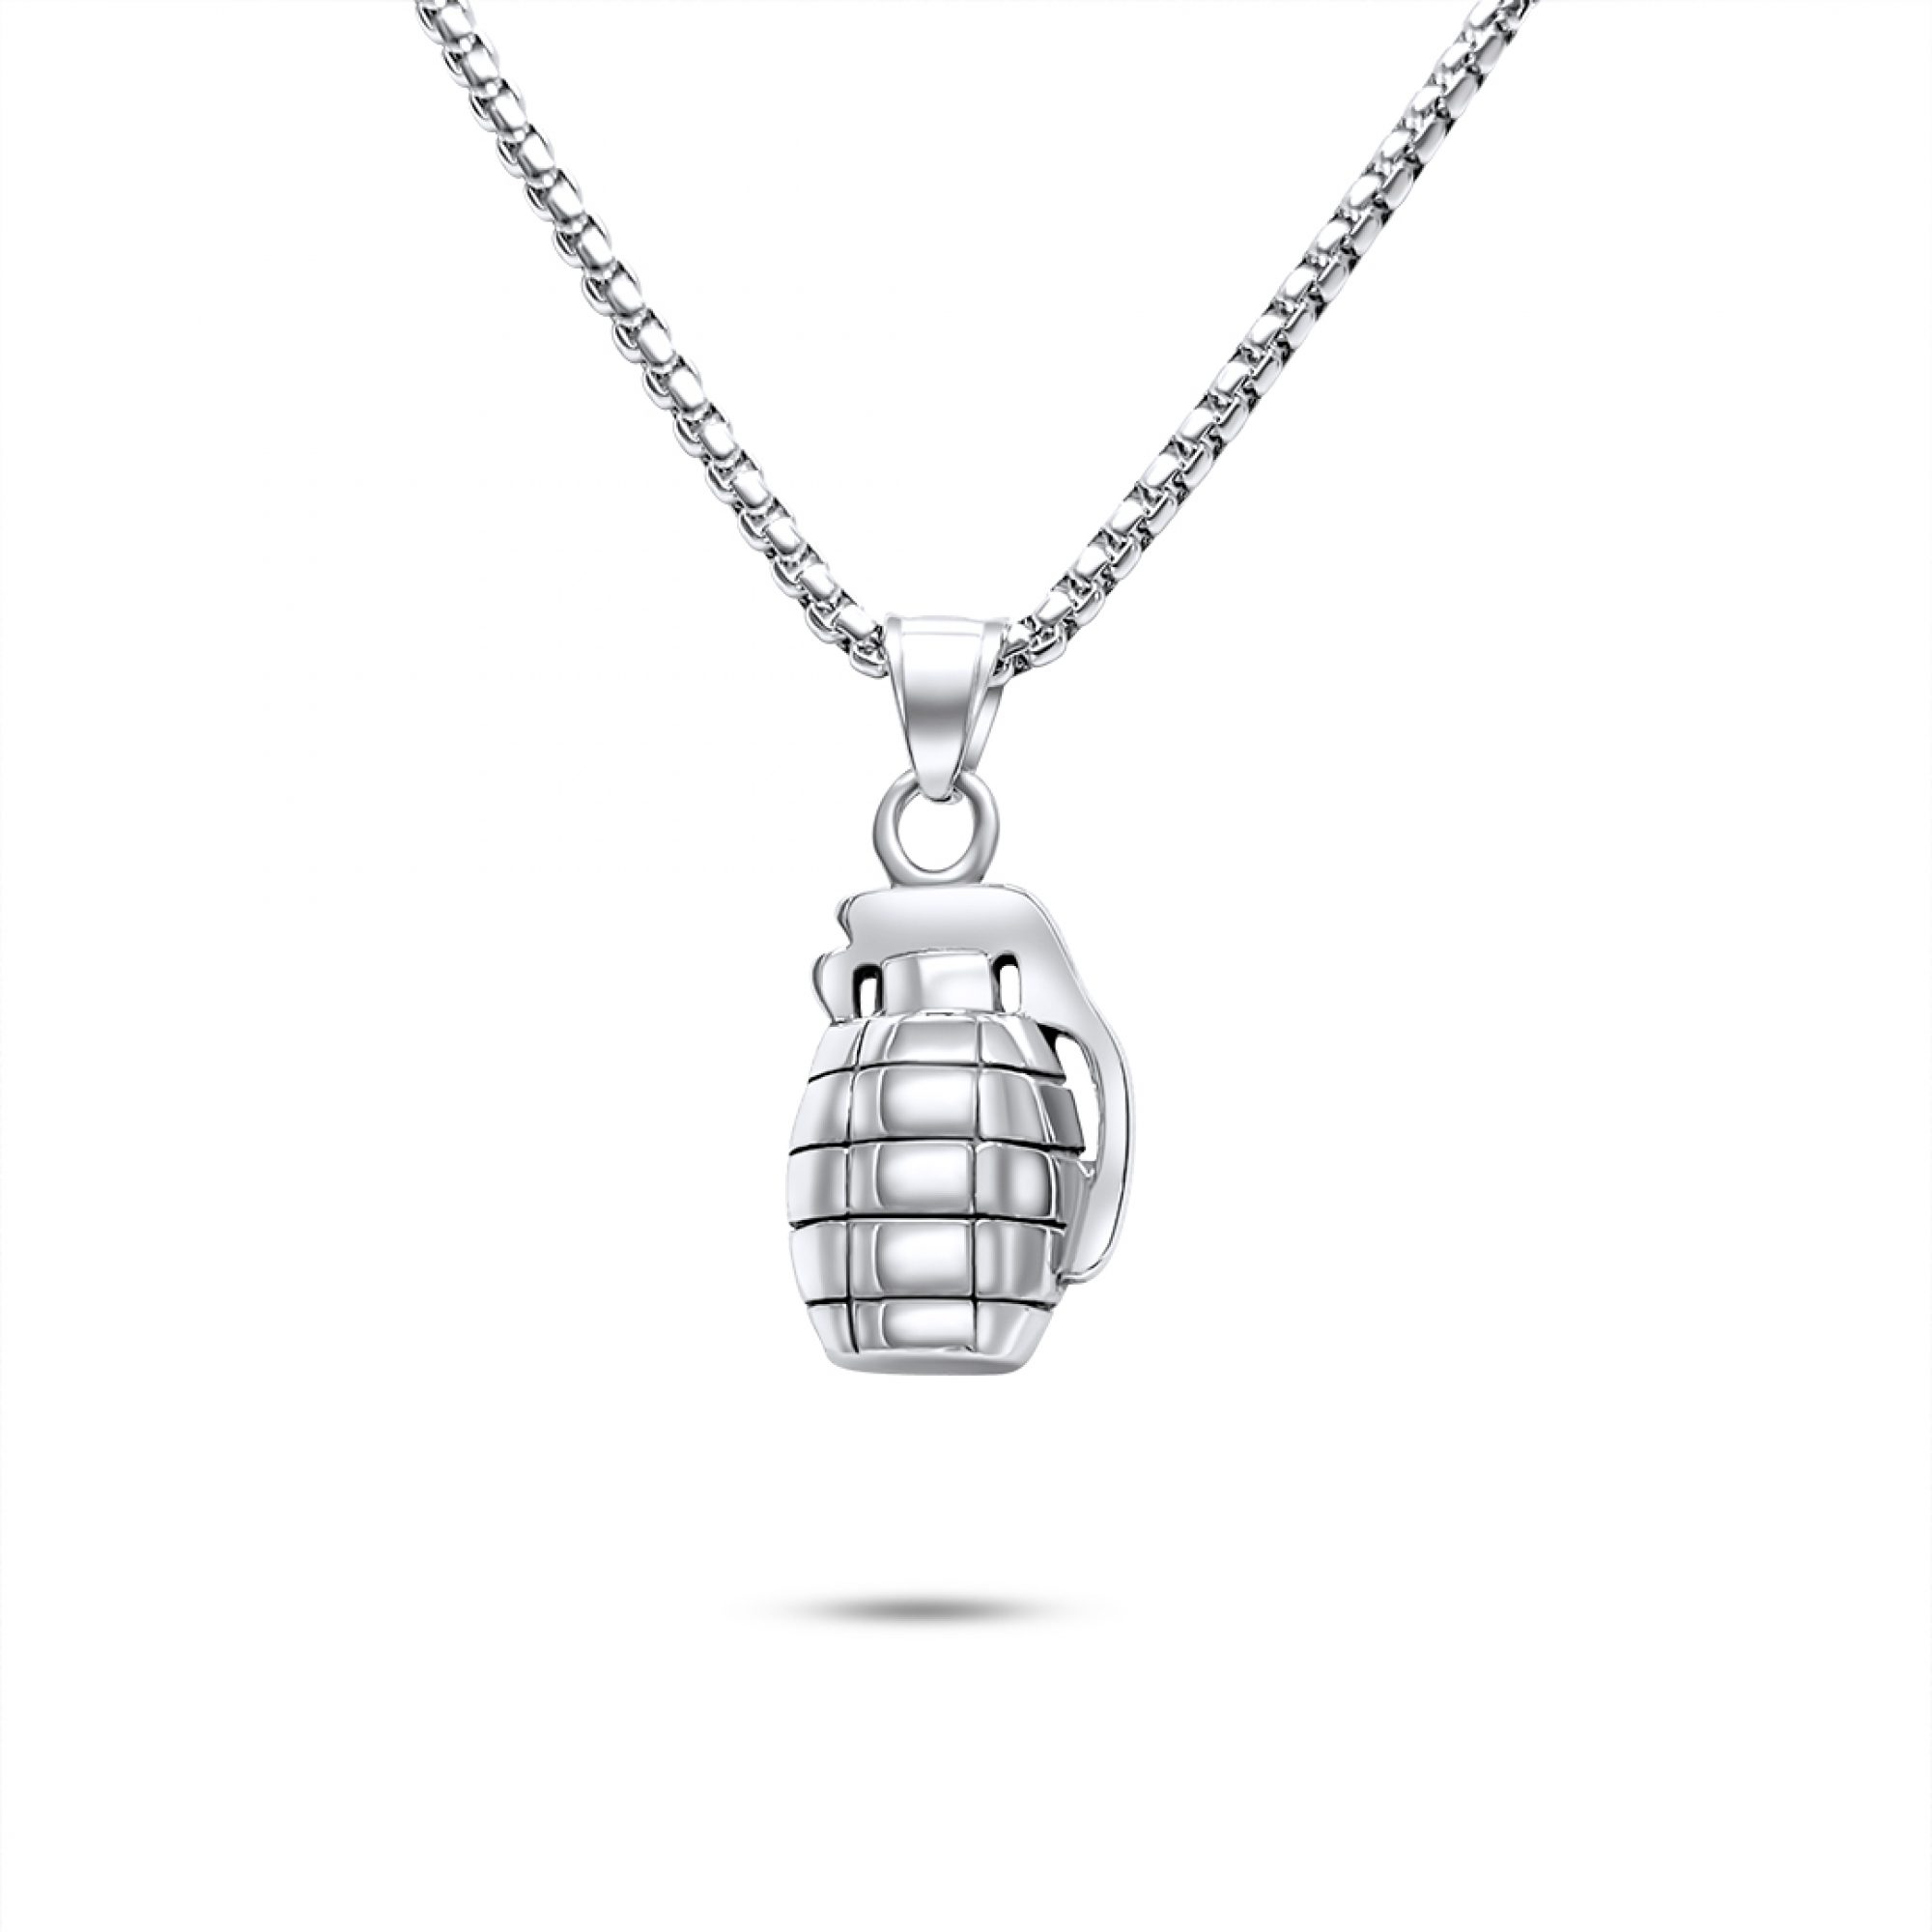 Steel grenade necklace